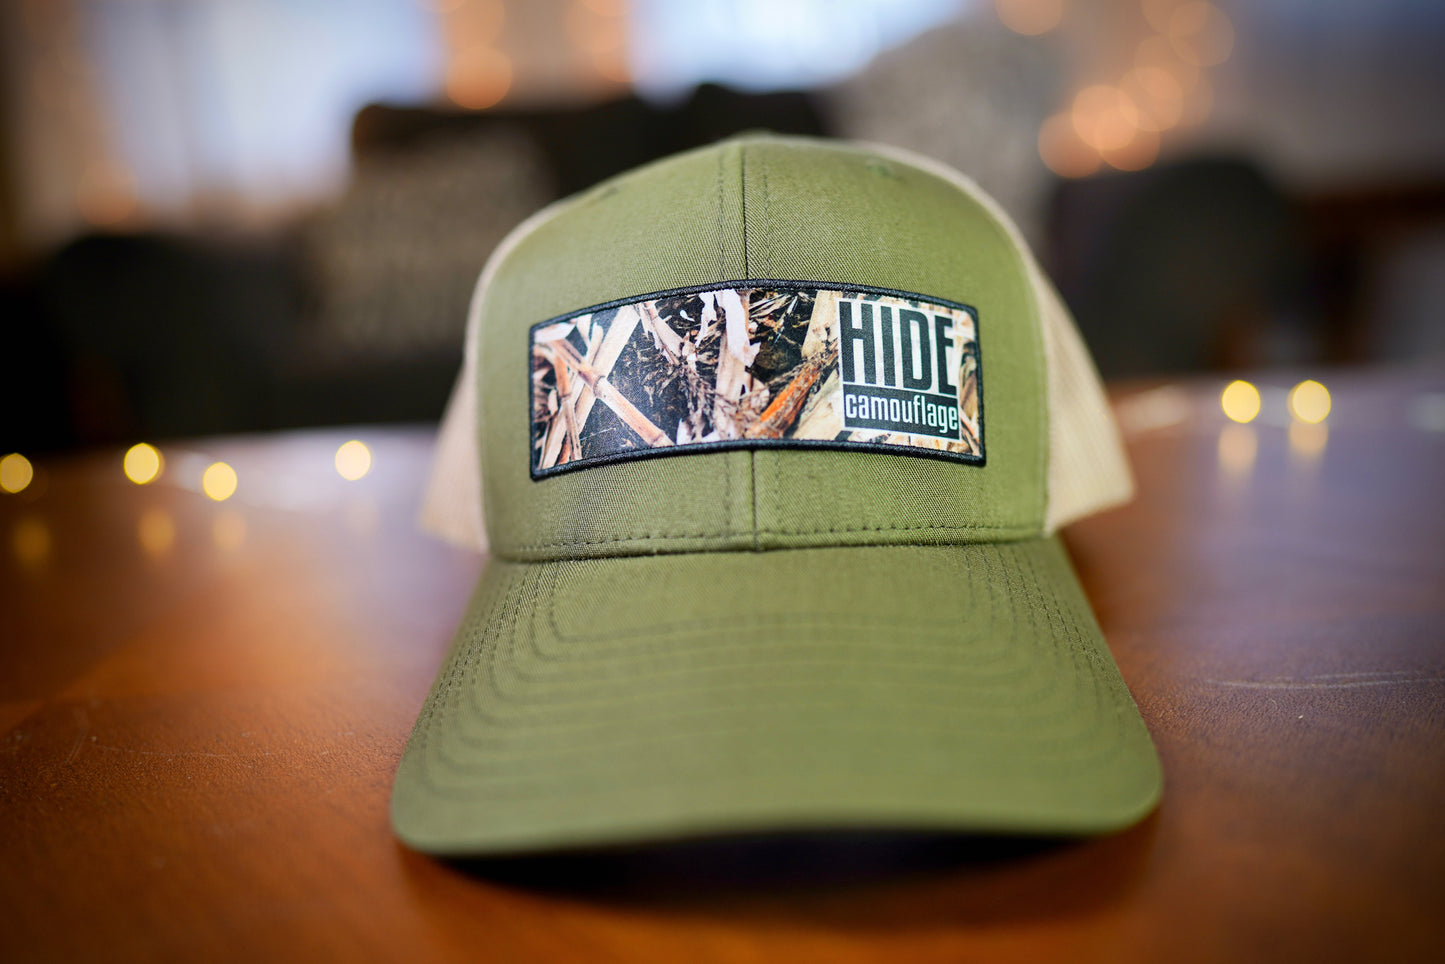 "Hide Camo Cornstalk" Design Trucker Hat (Khaki Mesh/ Moss Green Fabric)